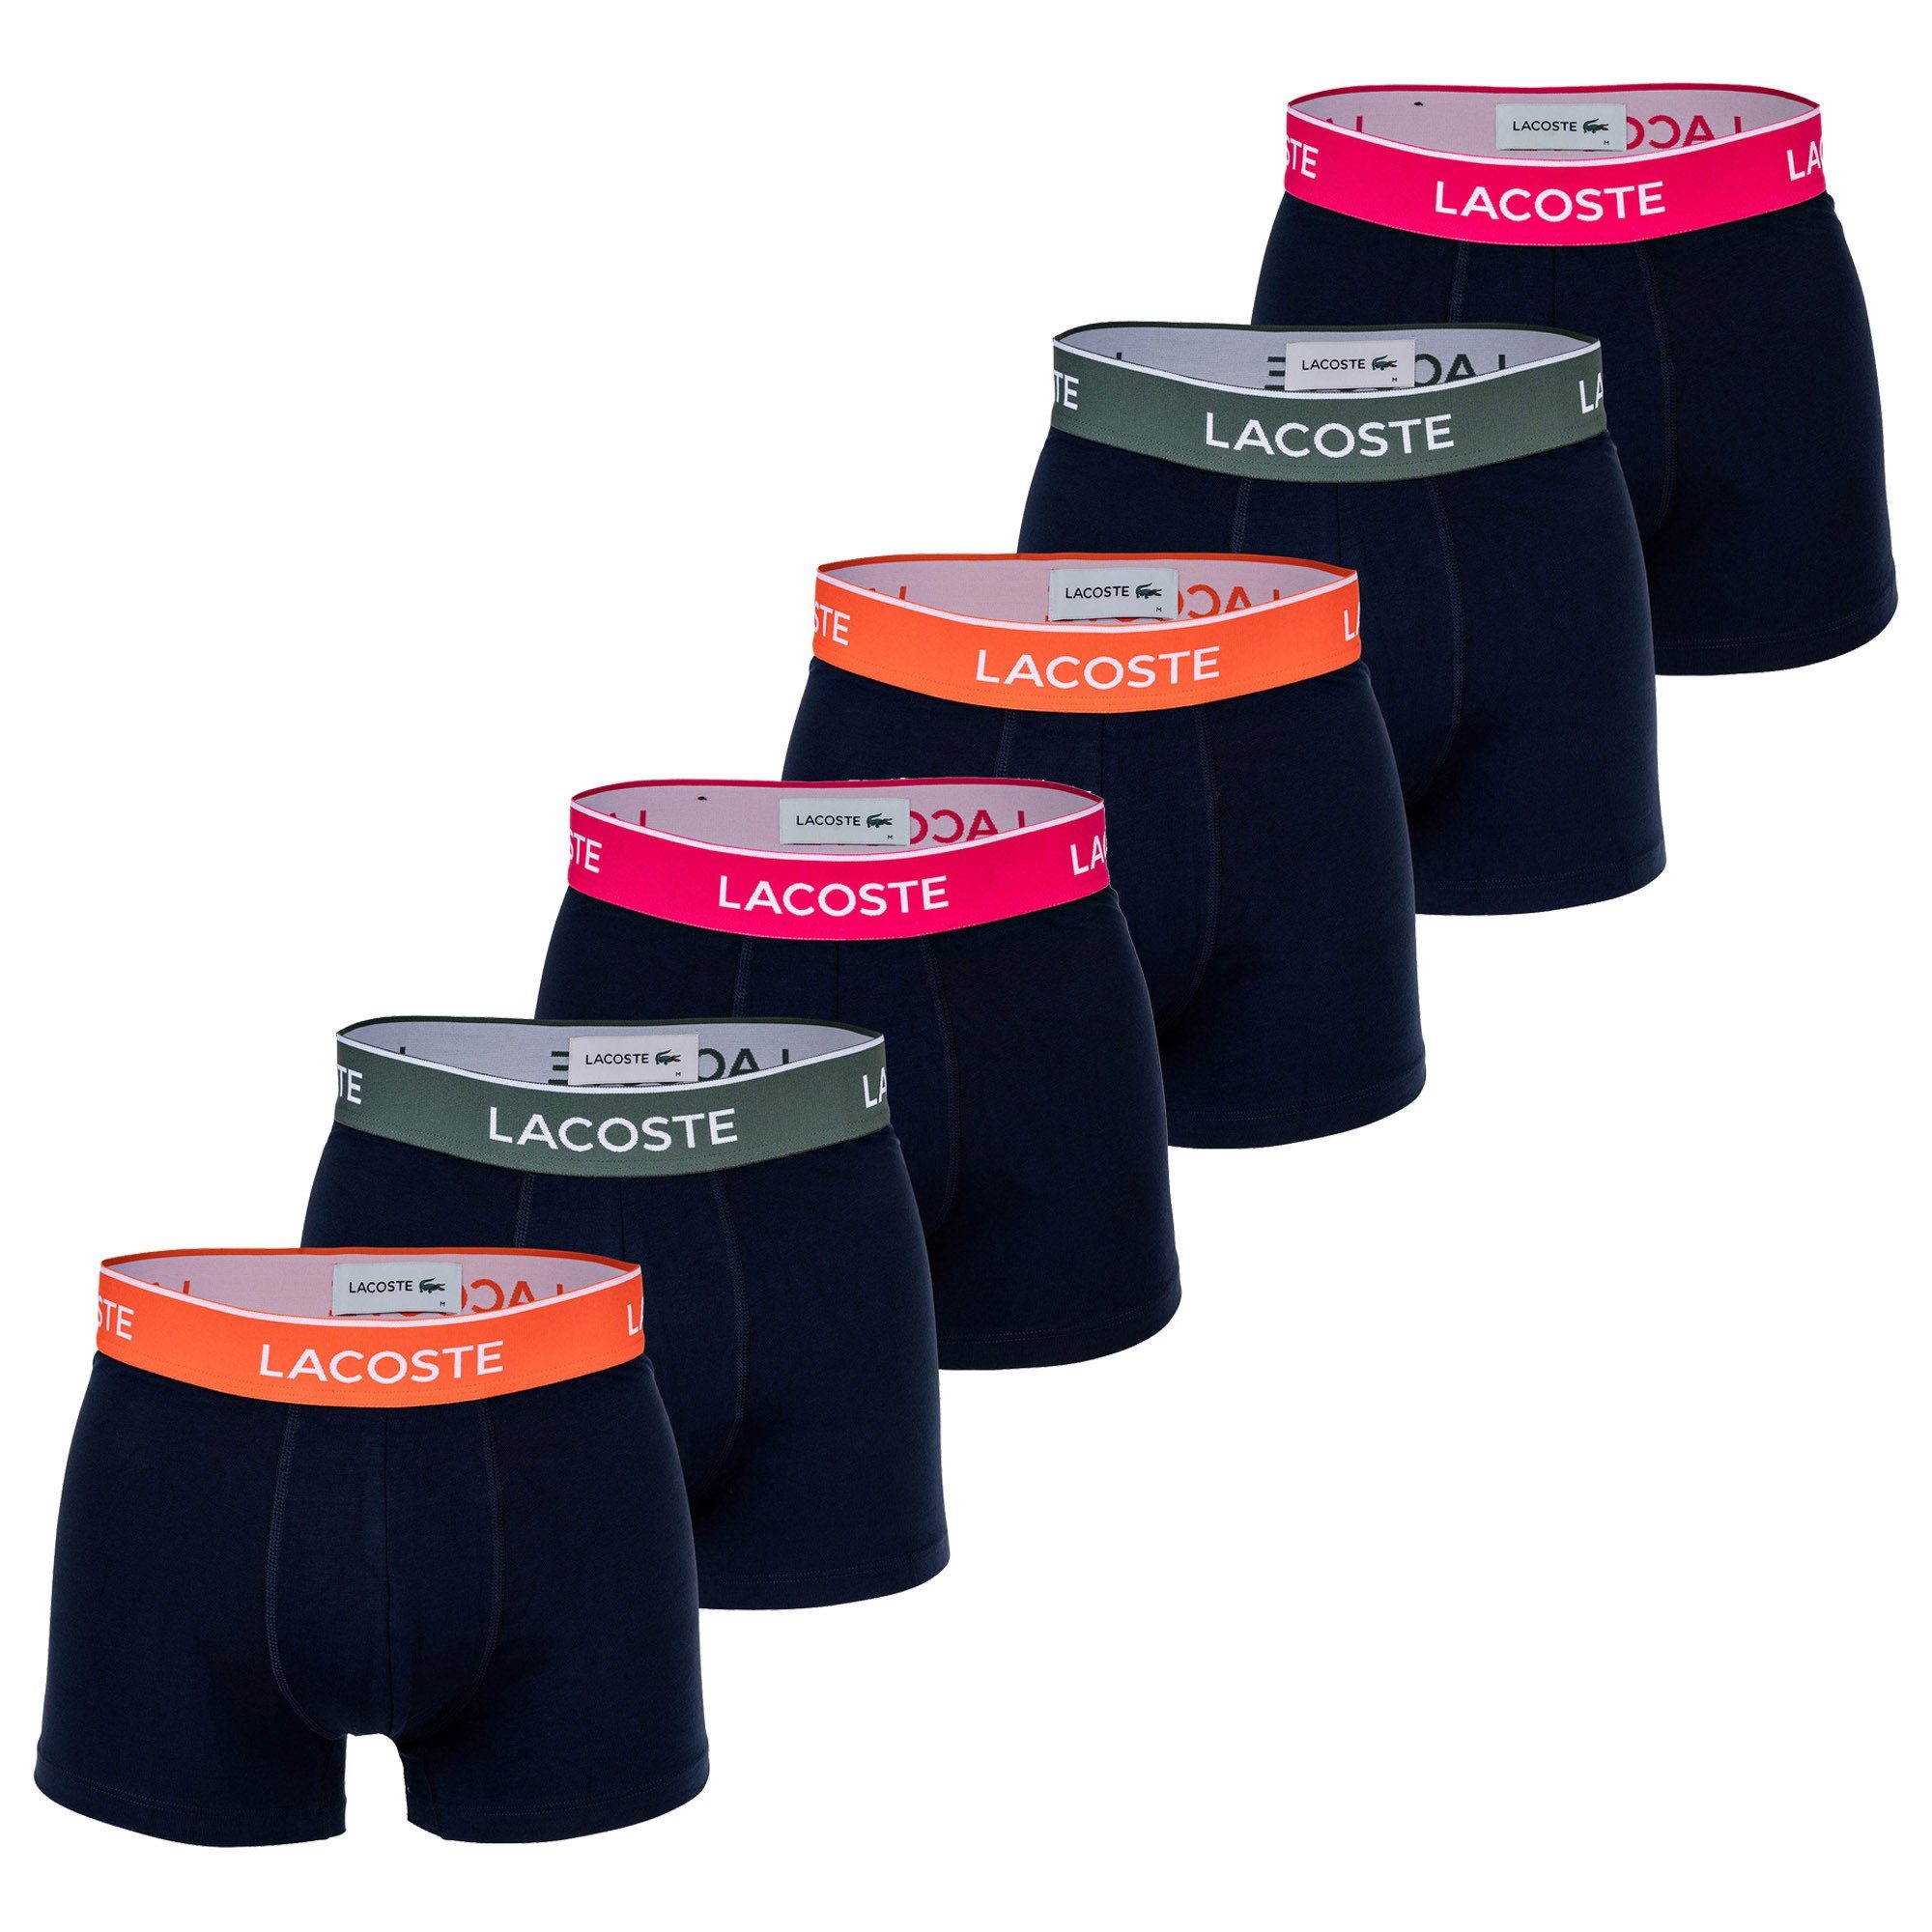 Lacoste Boxer Herren Boxershorts, 6er Pack Dunkelblau/Orange/Grün/Pink Casual Trunks, 